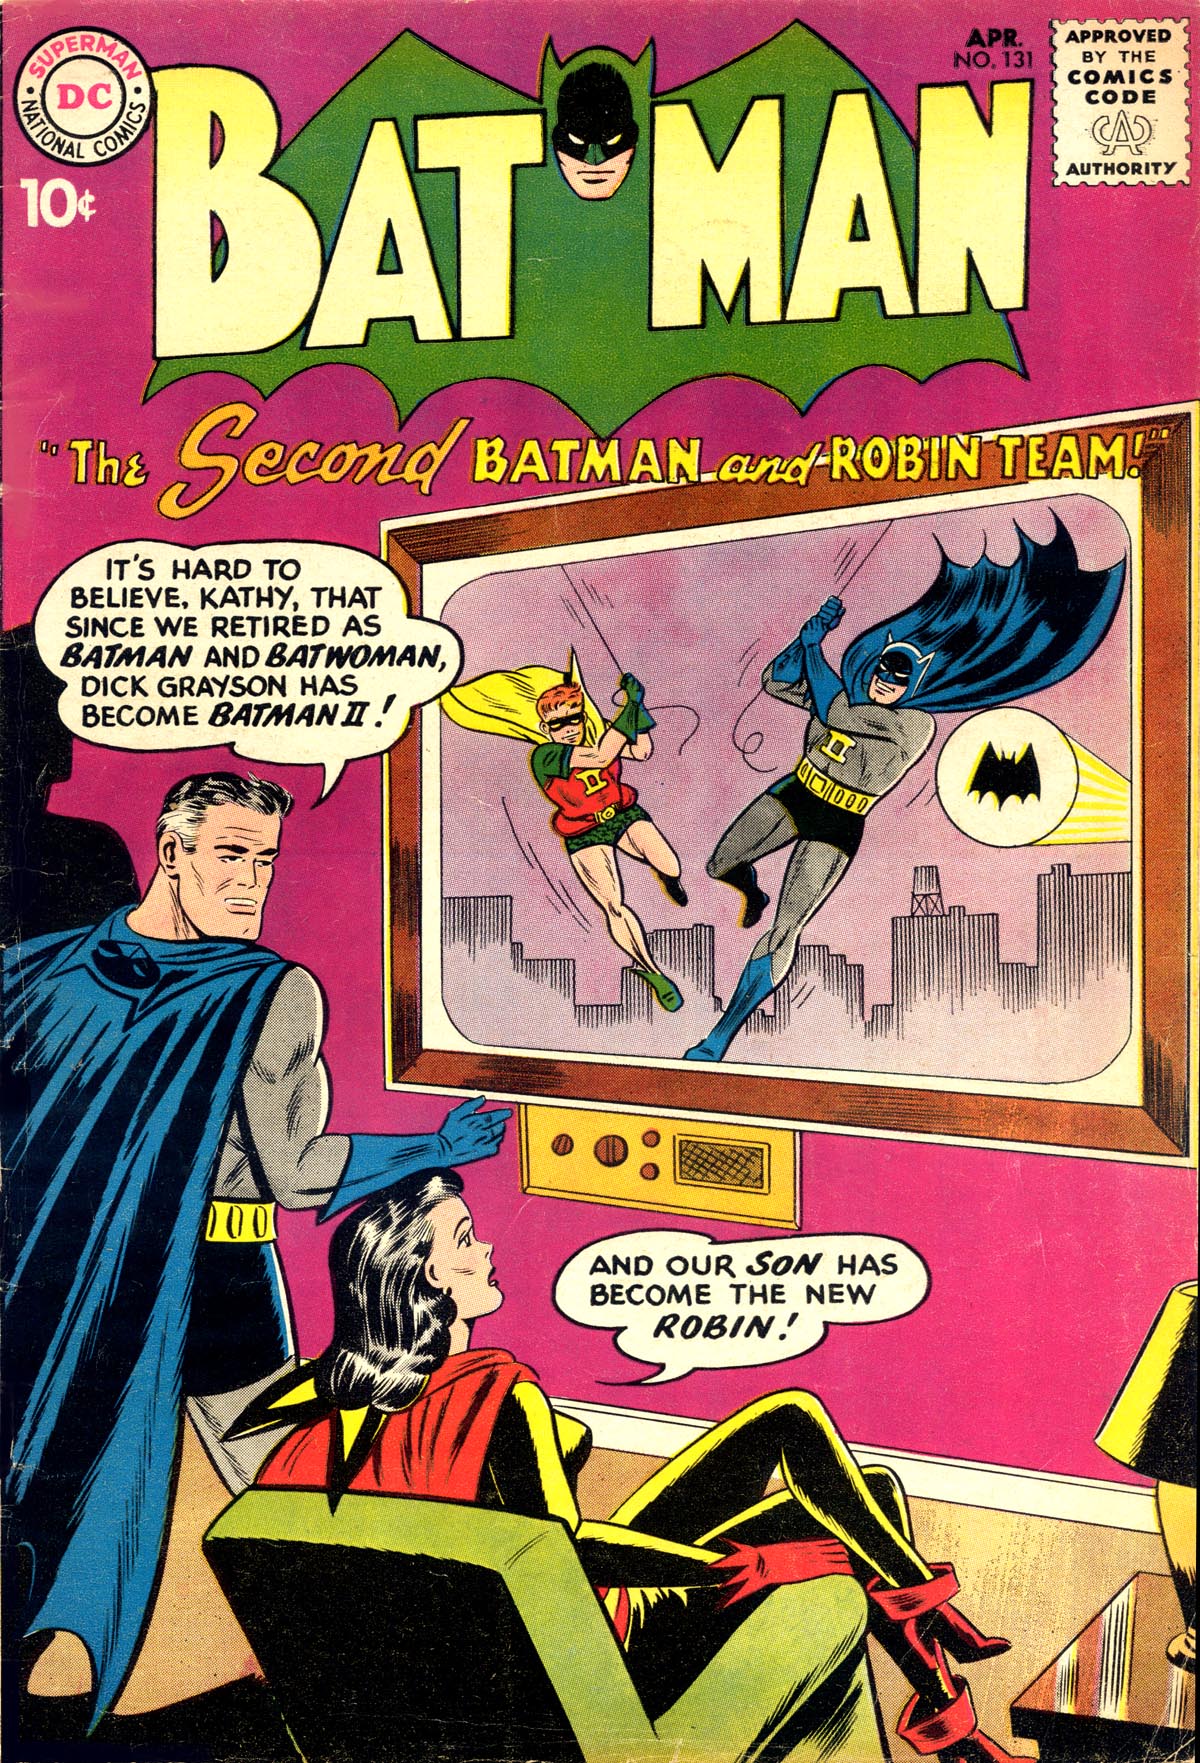 1939 19 Bon Anniversaire Batman Club Comics Sanctuary